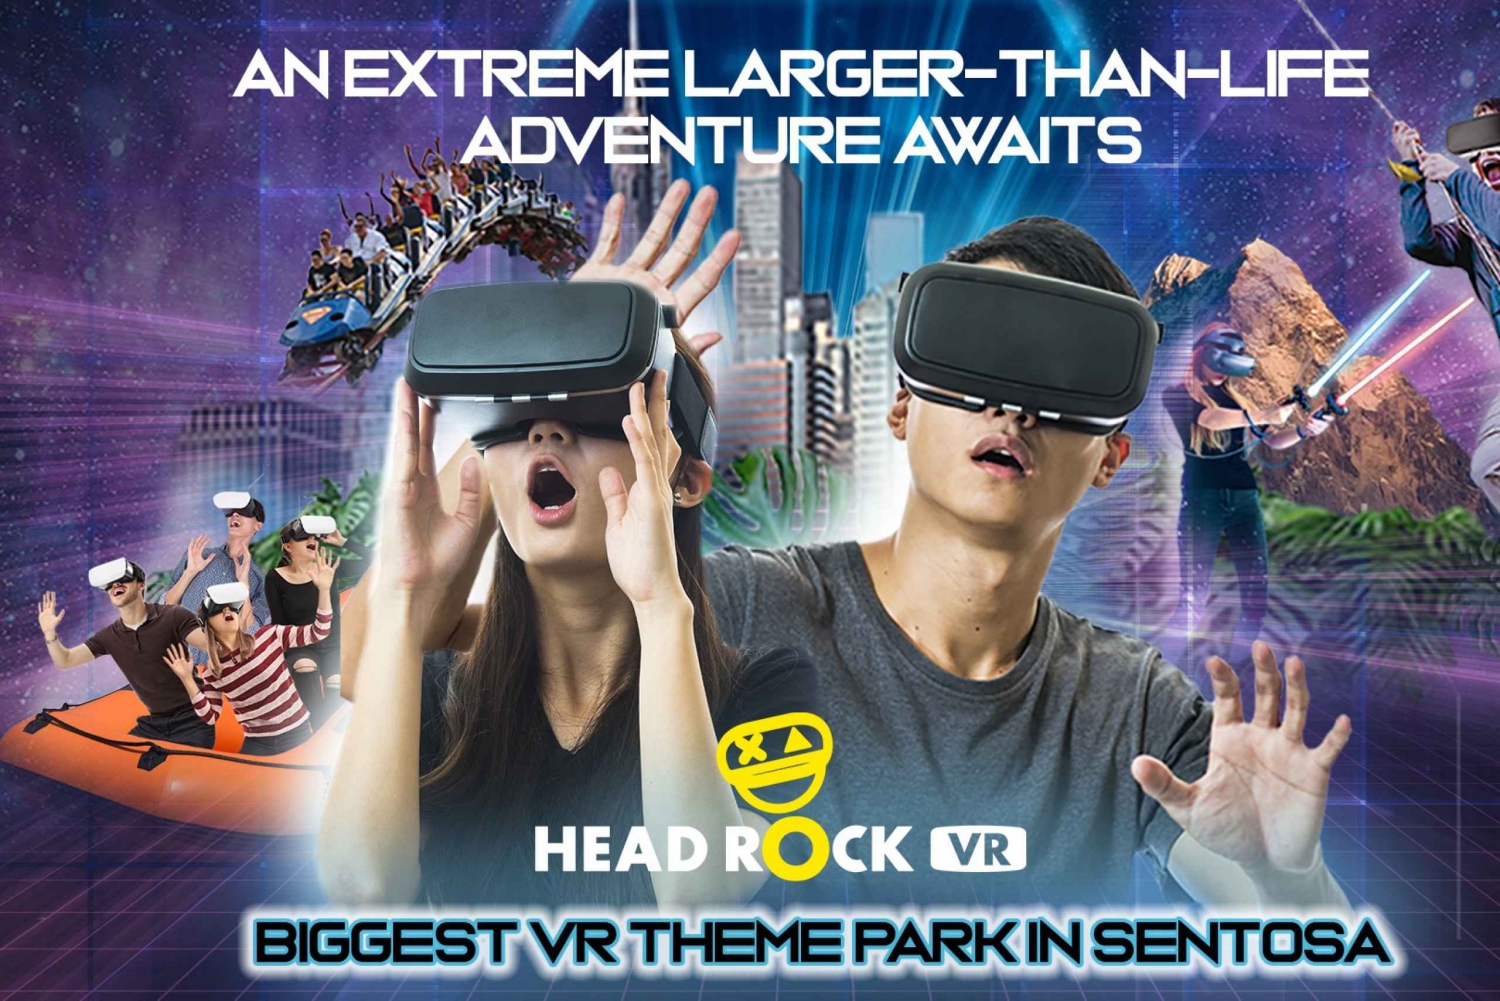 Singapore: HeadRock VR Experience